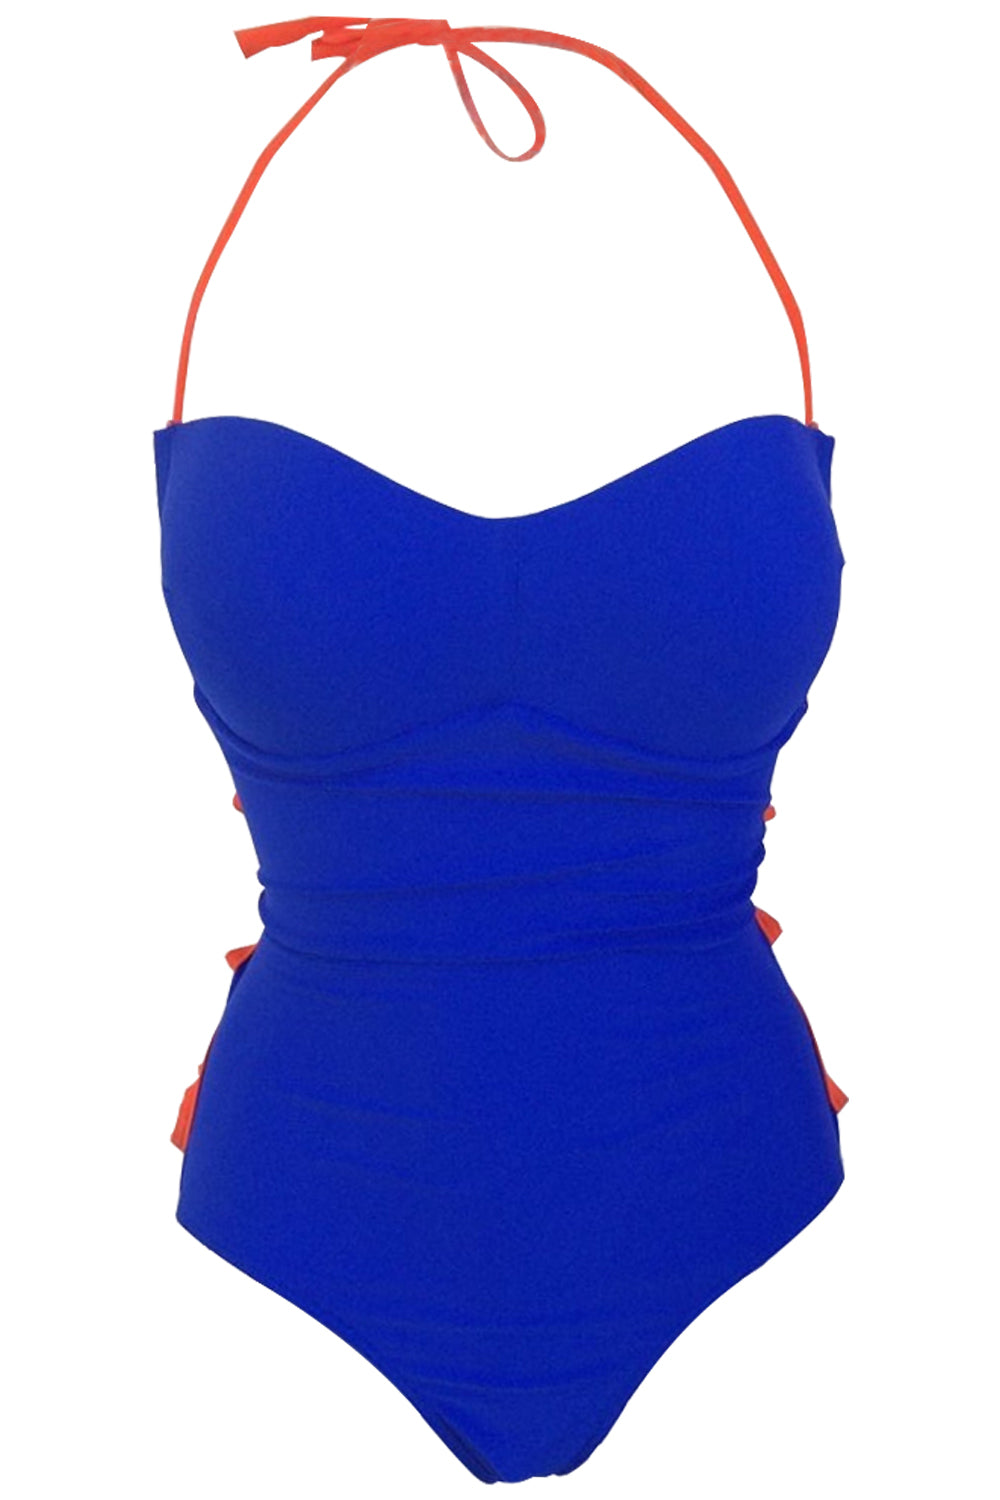 Iyasson Blue Back Cross Halter One-piece Swimsuit